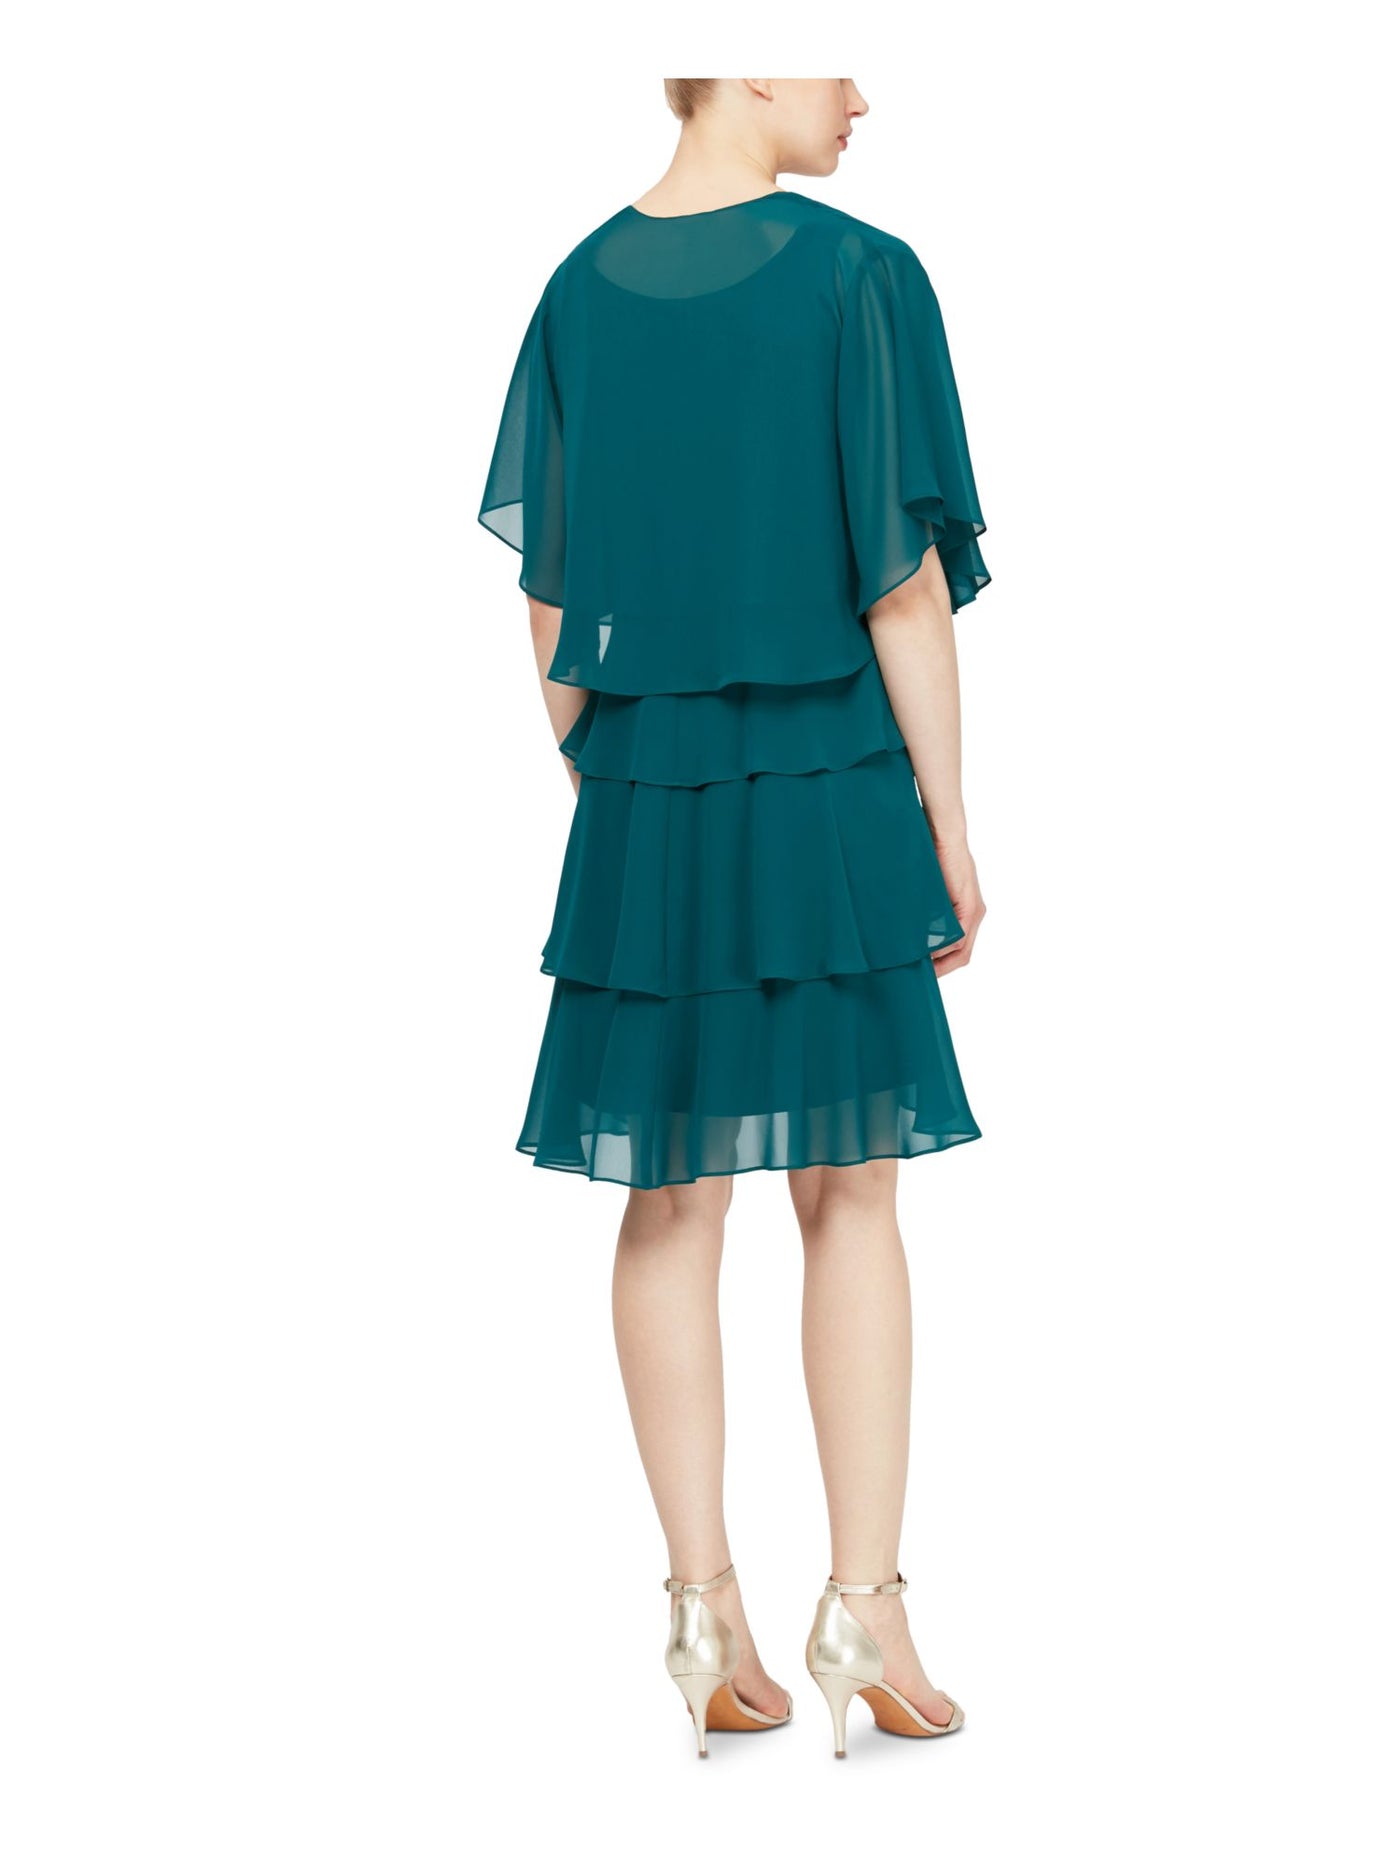 SLNY Womens Teal Short Sleeve Open Cardigan Top Size: 8